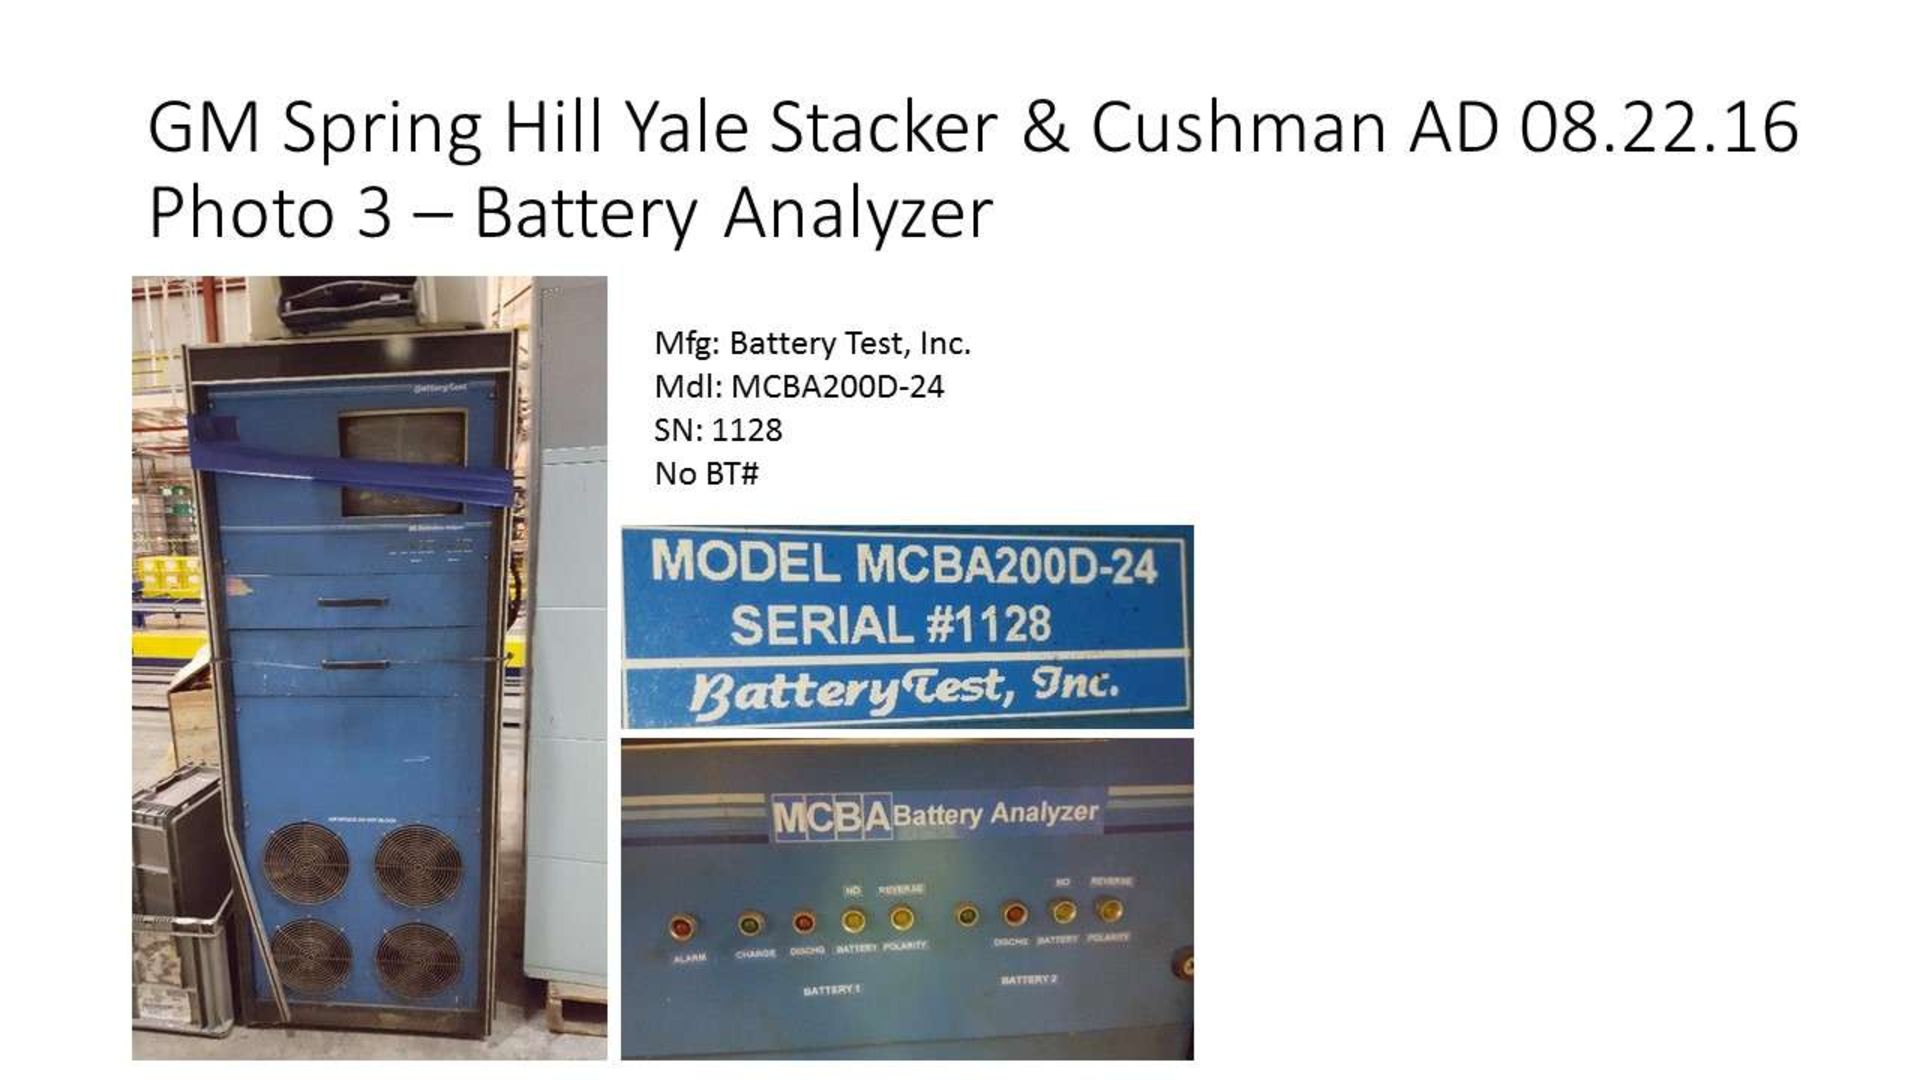 Battery Test Inc MCBA200D-24 Battery Analyzer